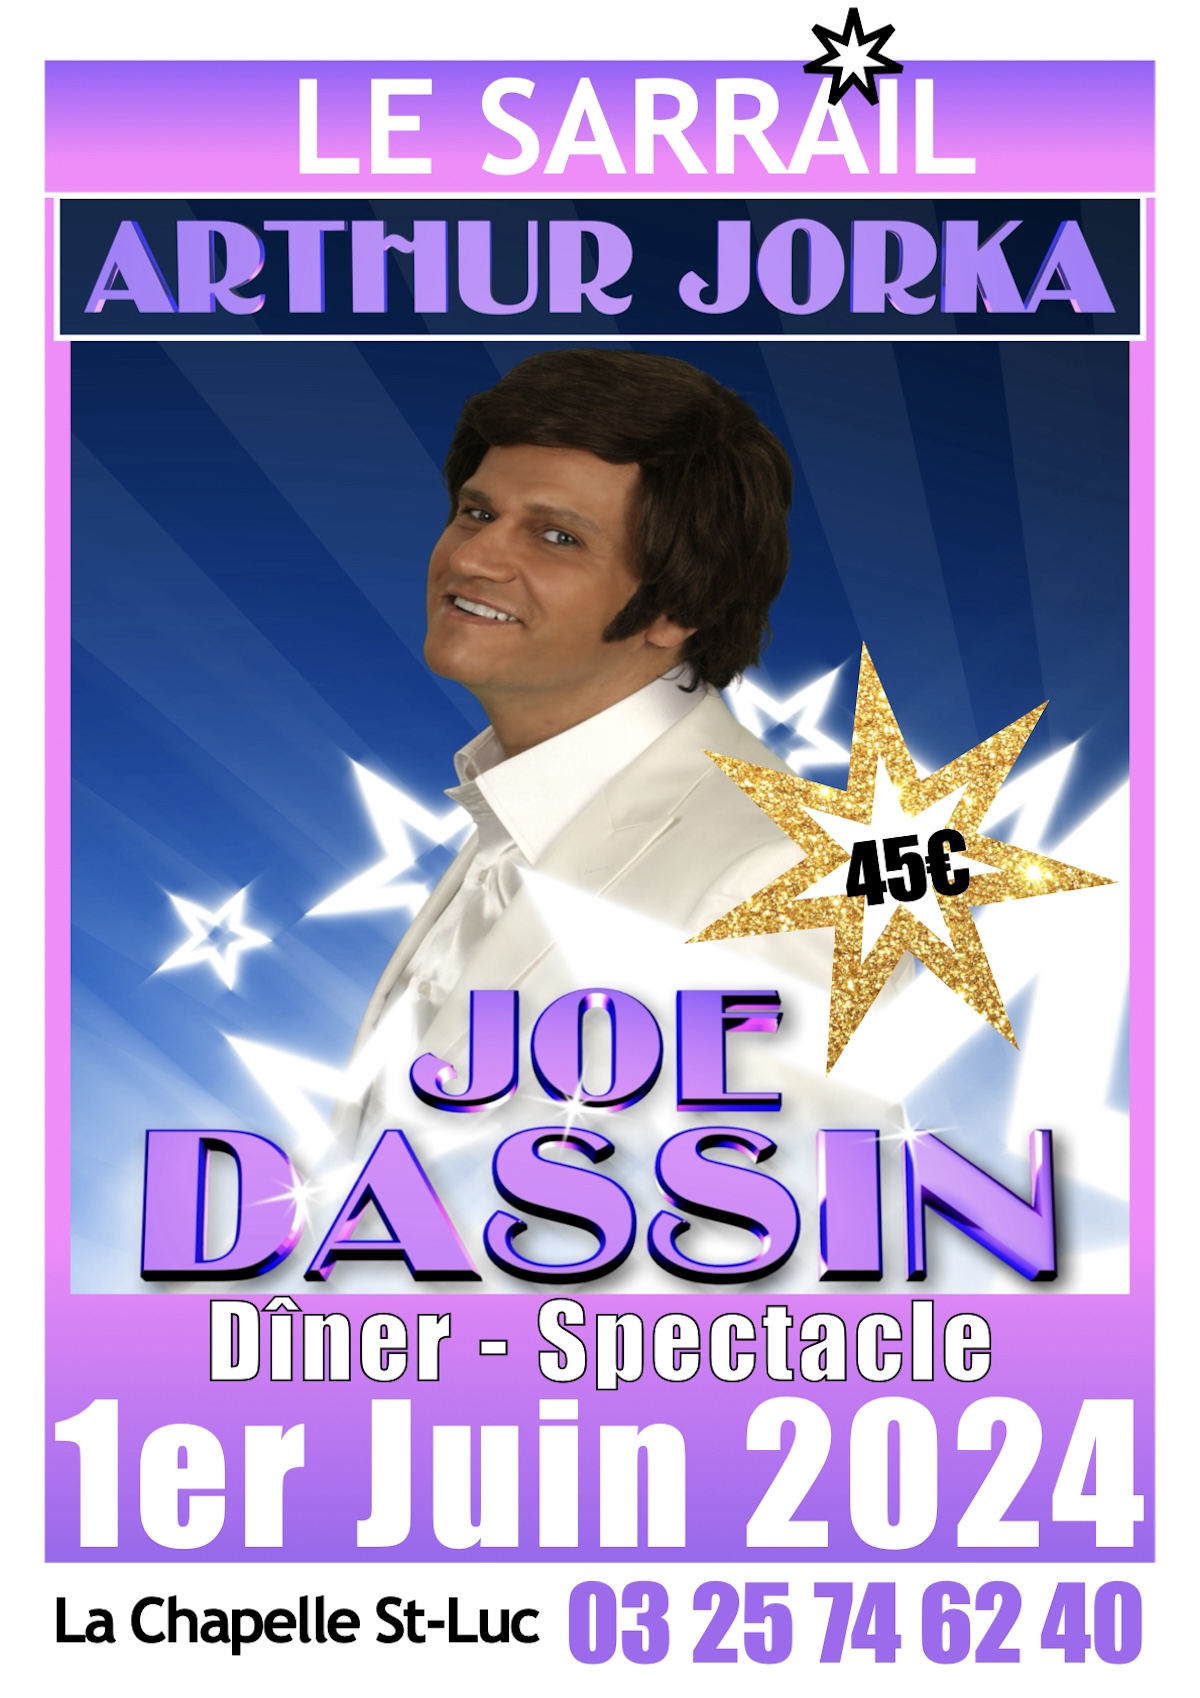 Spectacle hommage à Joe DASSIN “Dassin for Ever” avec Arthur JORKA